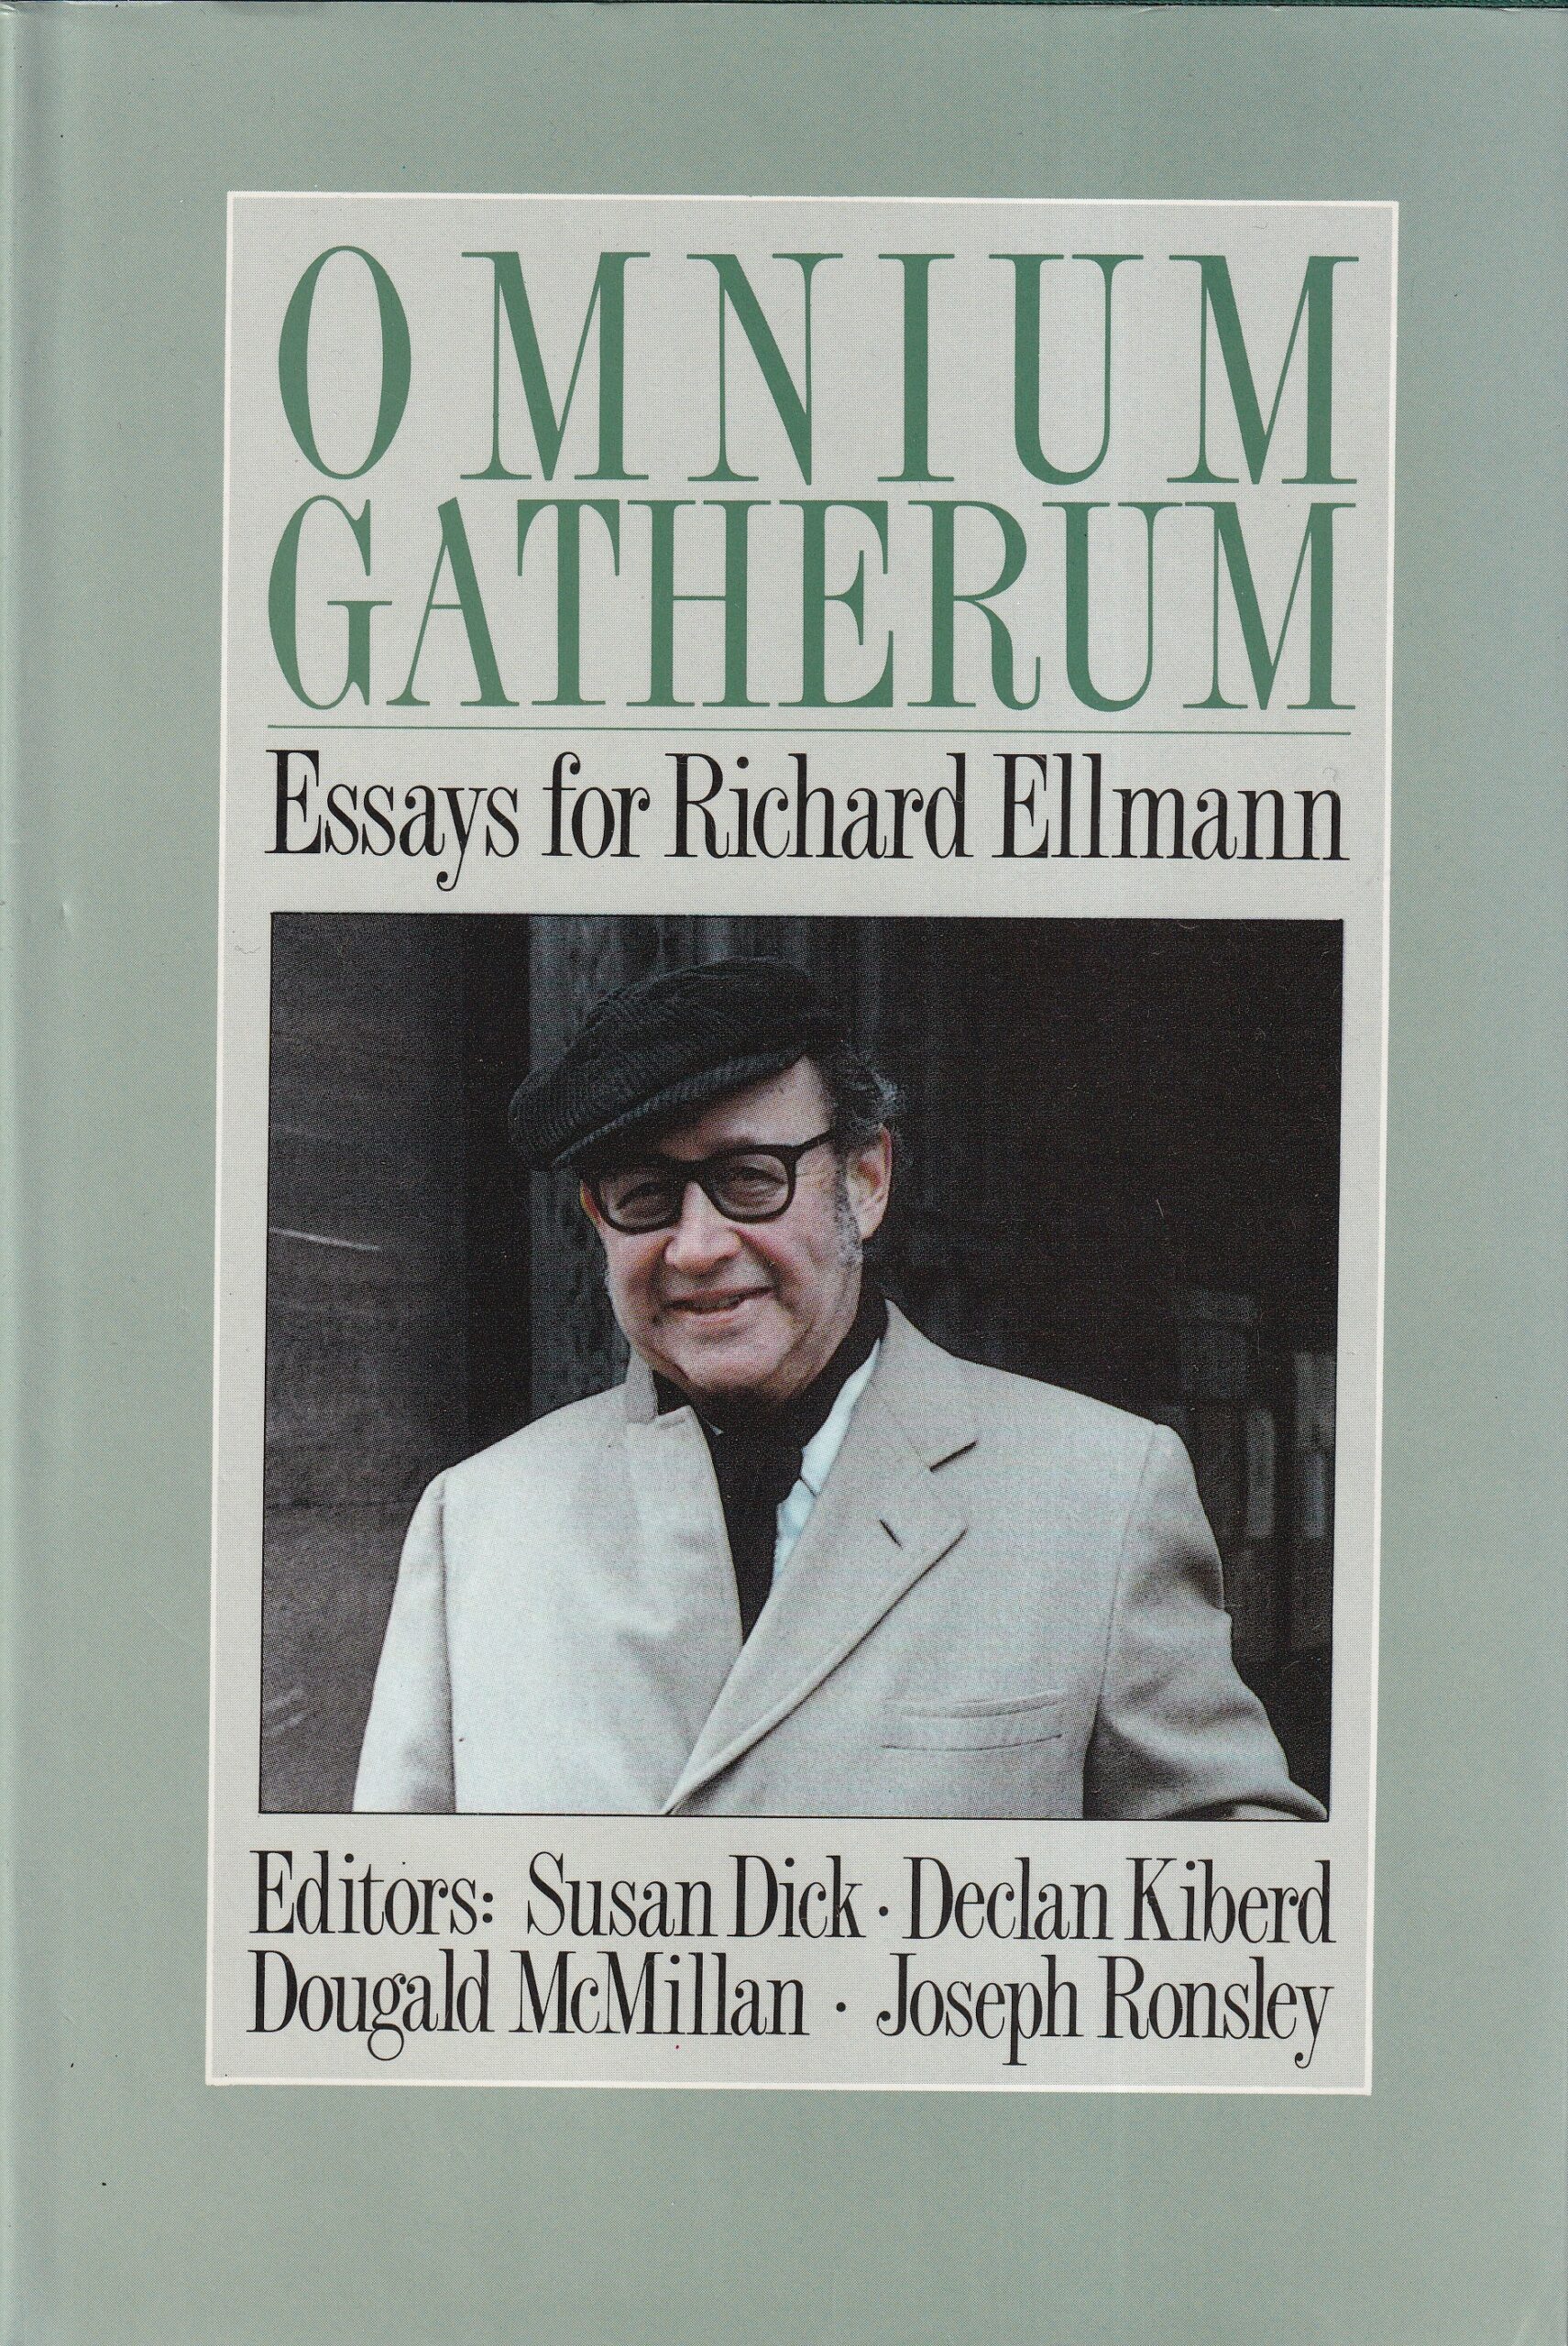 Omnium Gatherum: Essays for Richard Ellmann by Susan Dick, Declan Kiberd, Douglas McMillan and Joseph Ronsley (eds.)